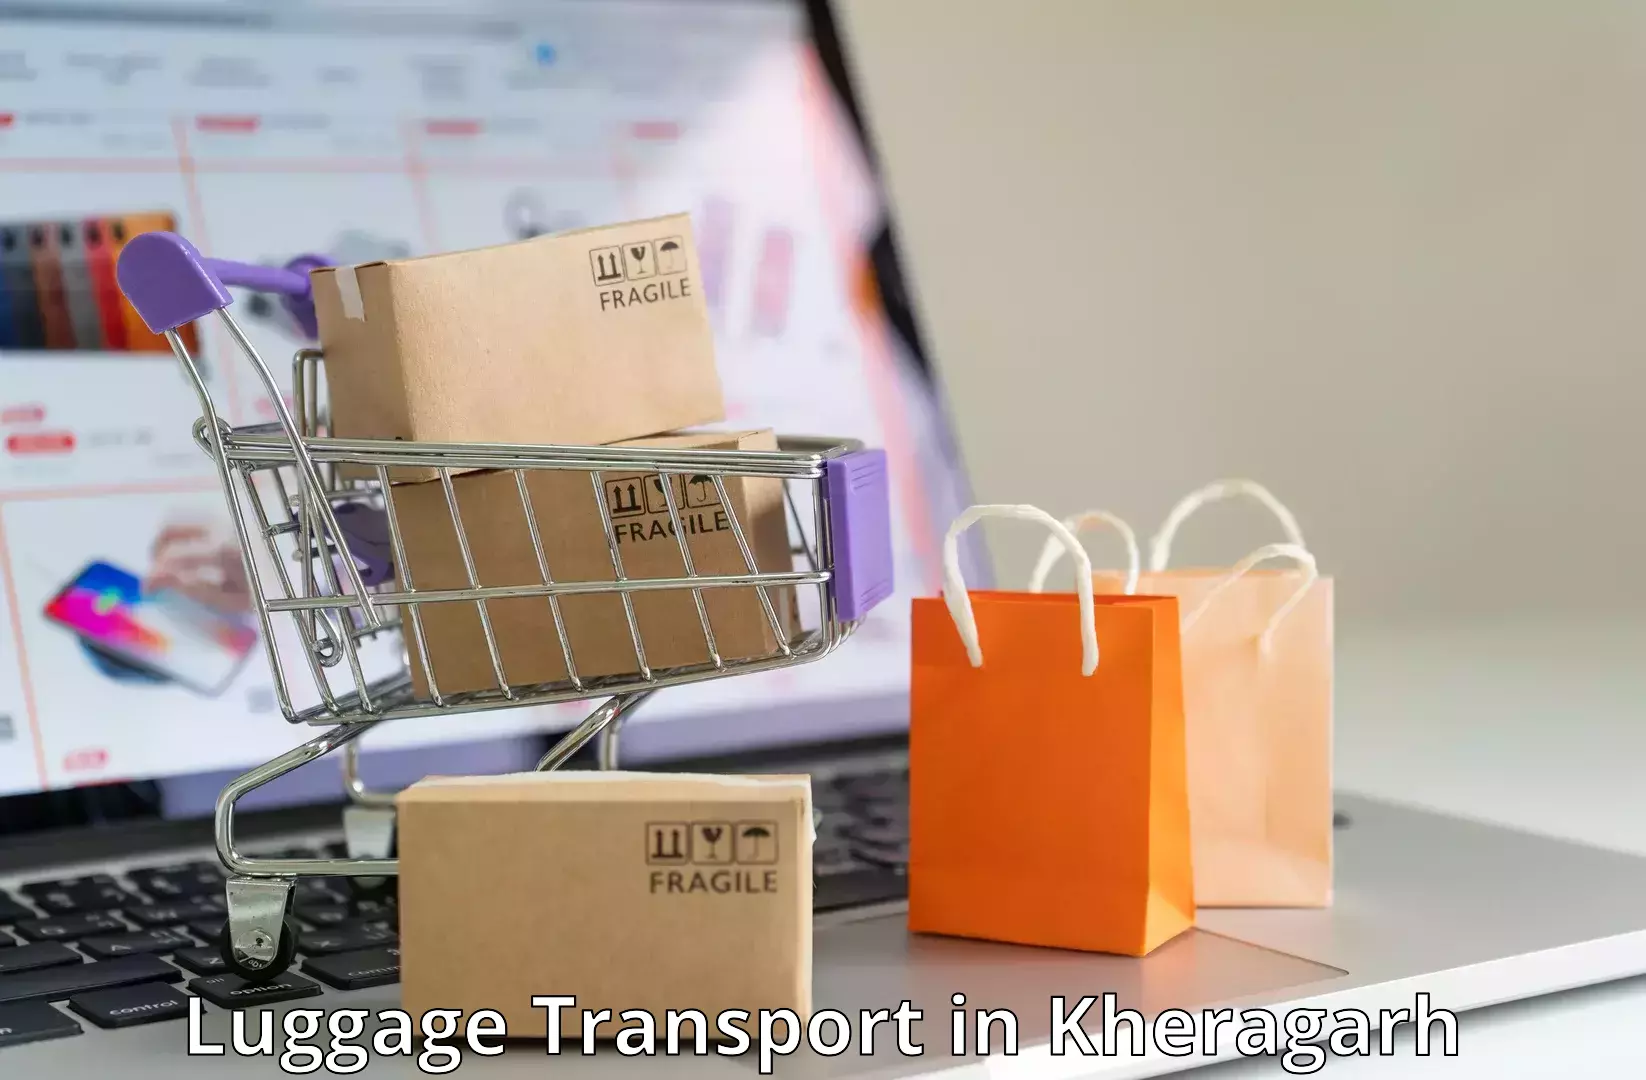 Baggage transport technology in Kheragarh